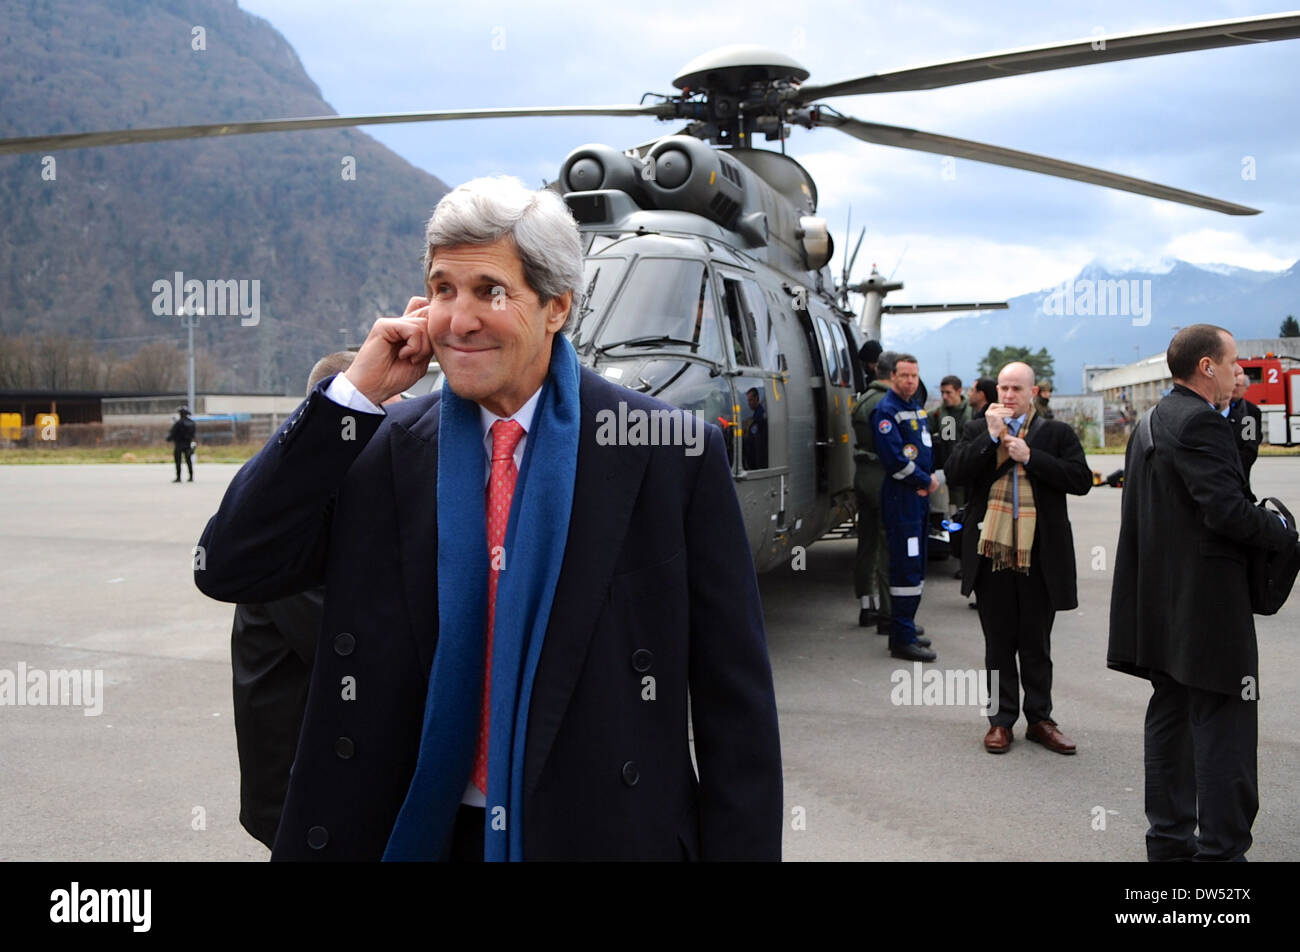 Secretary Kerry Pauses Before Helicopter Flight Across Switzerland Stock Photo